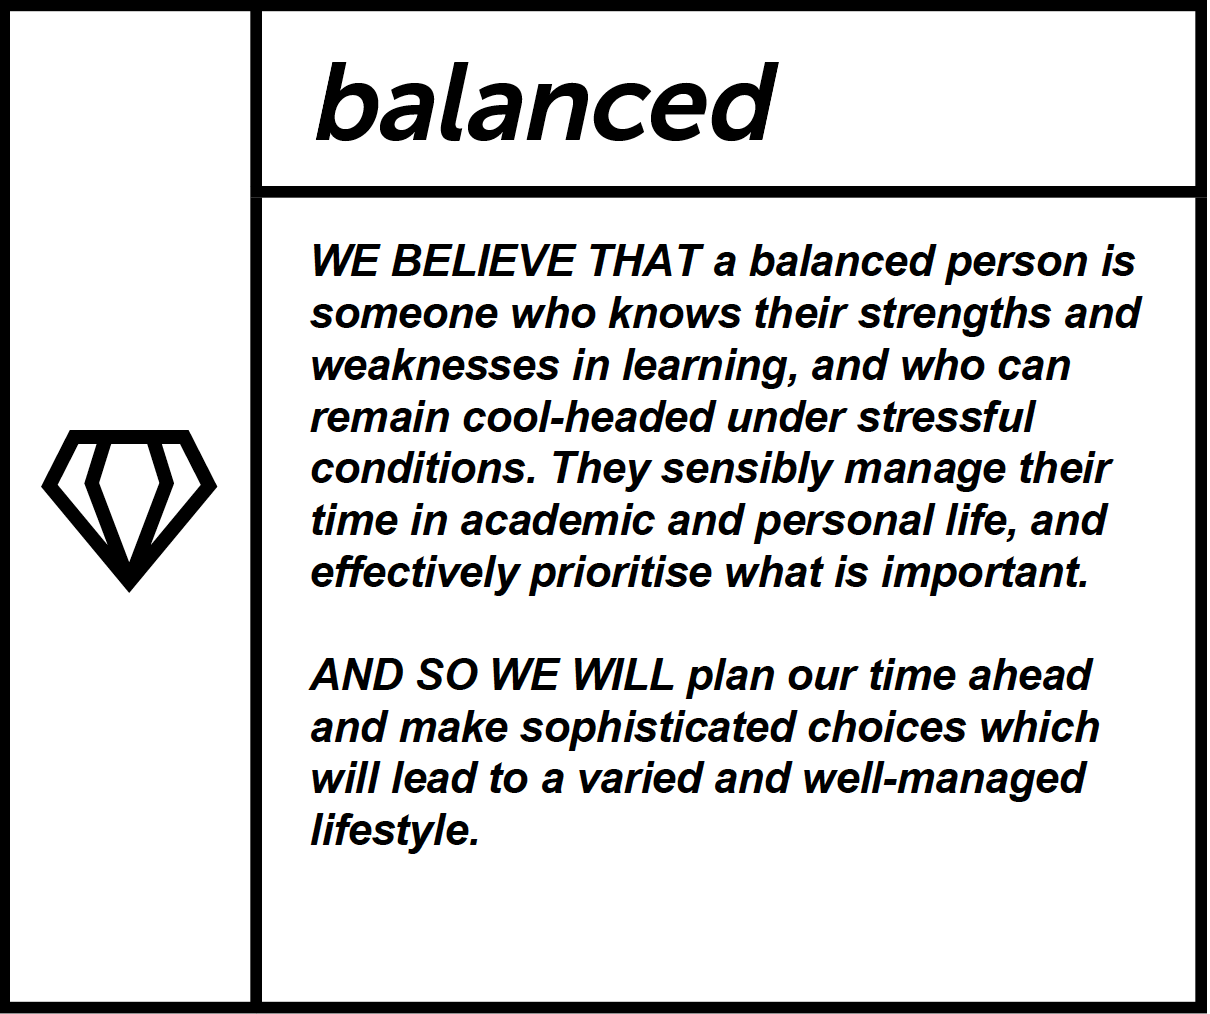 9. balanced